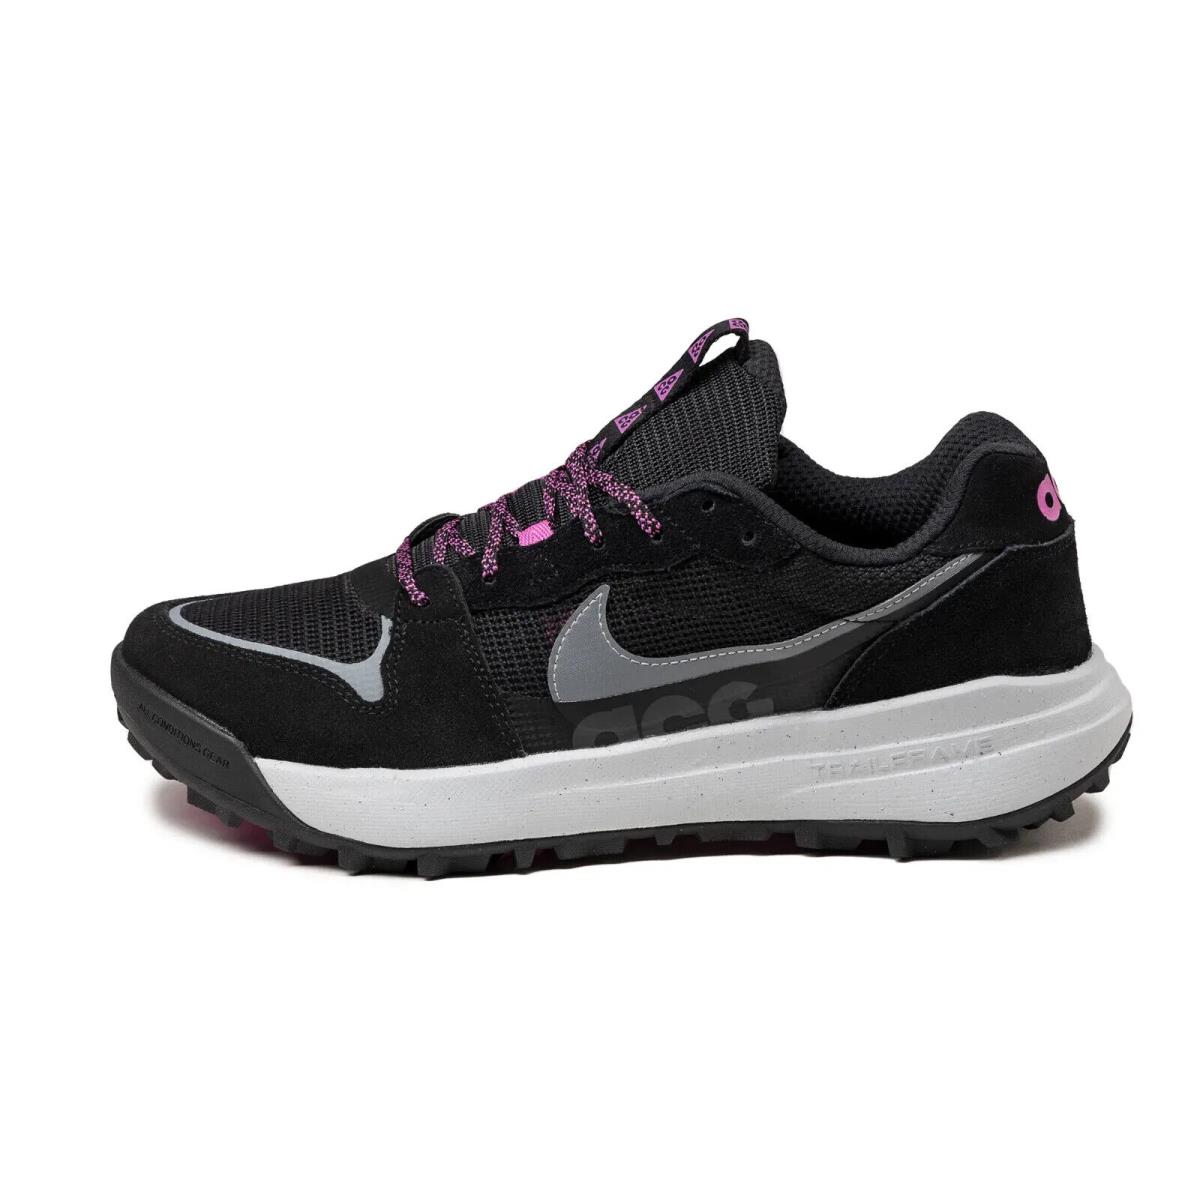 Nike Acg Lowcate Grey Black Hyper Violet Hiking Shoes Men`s Sz 9 DM8019-002